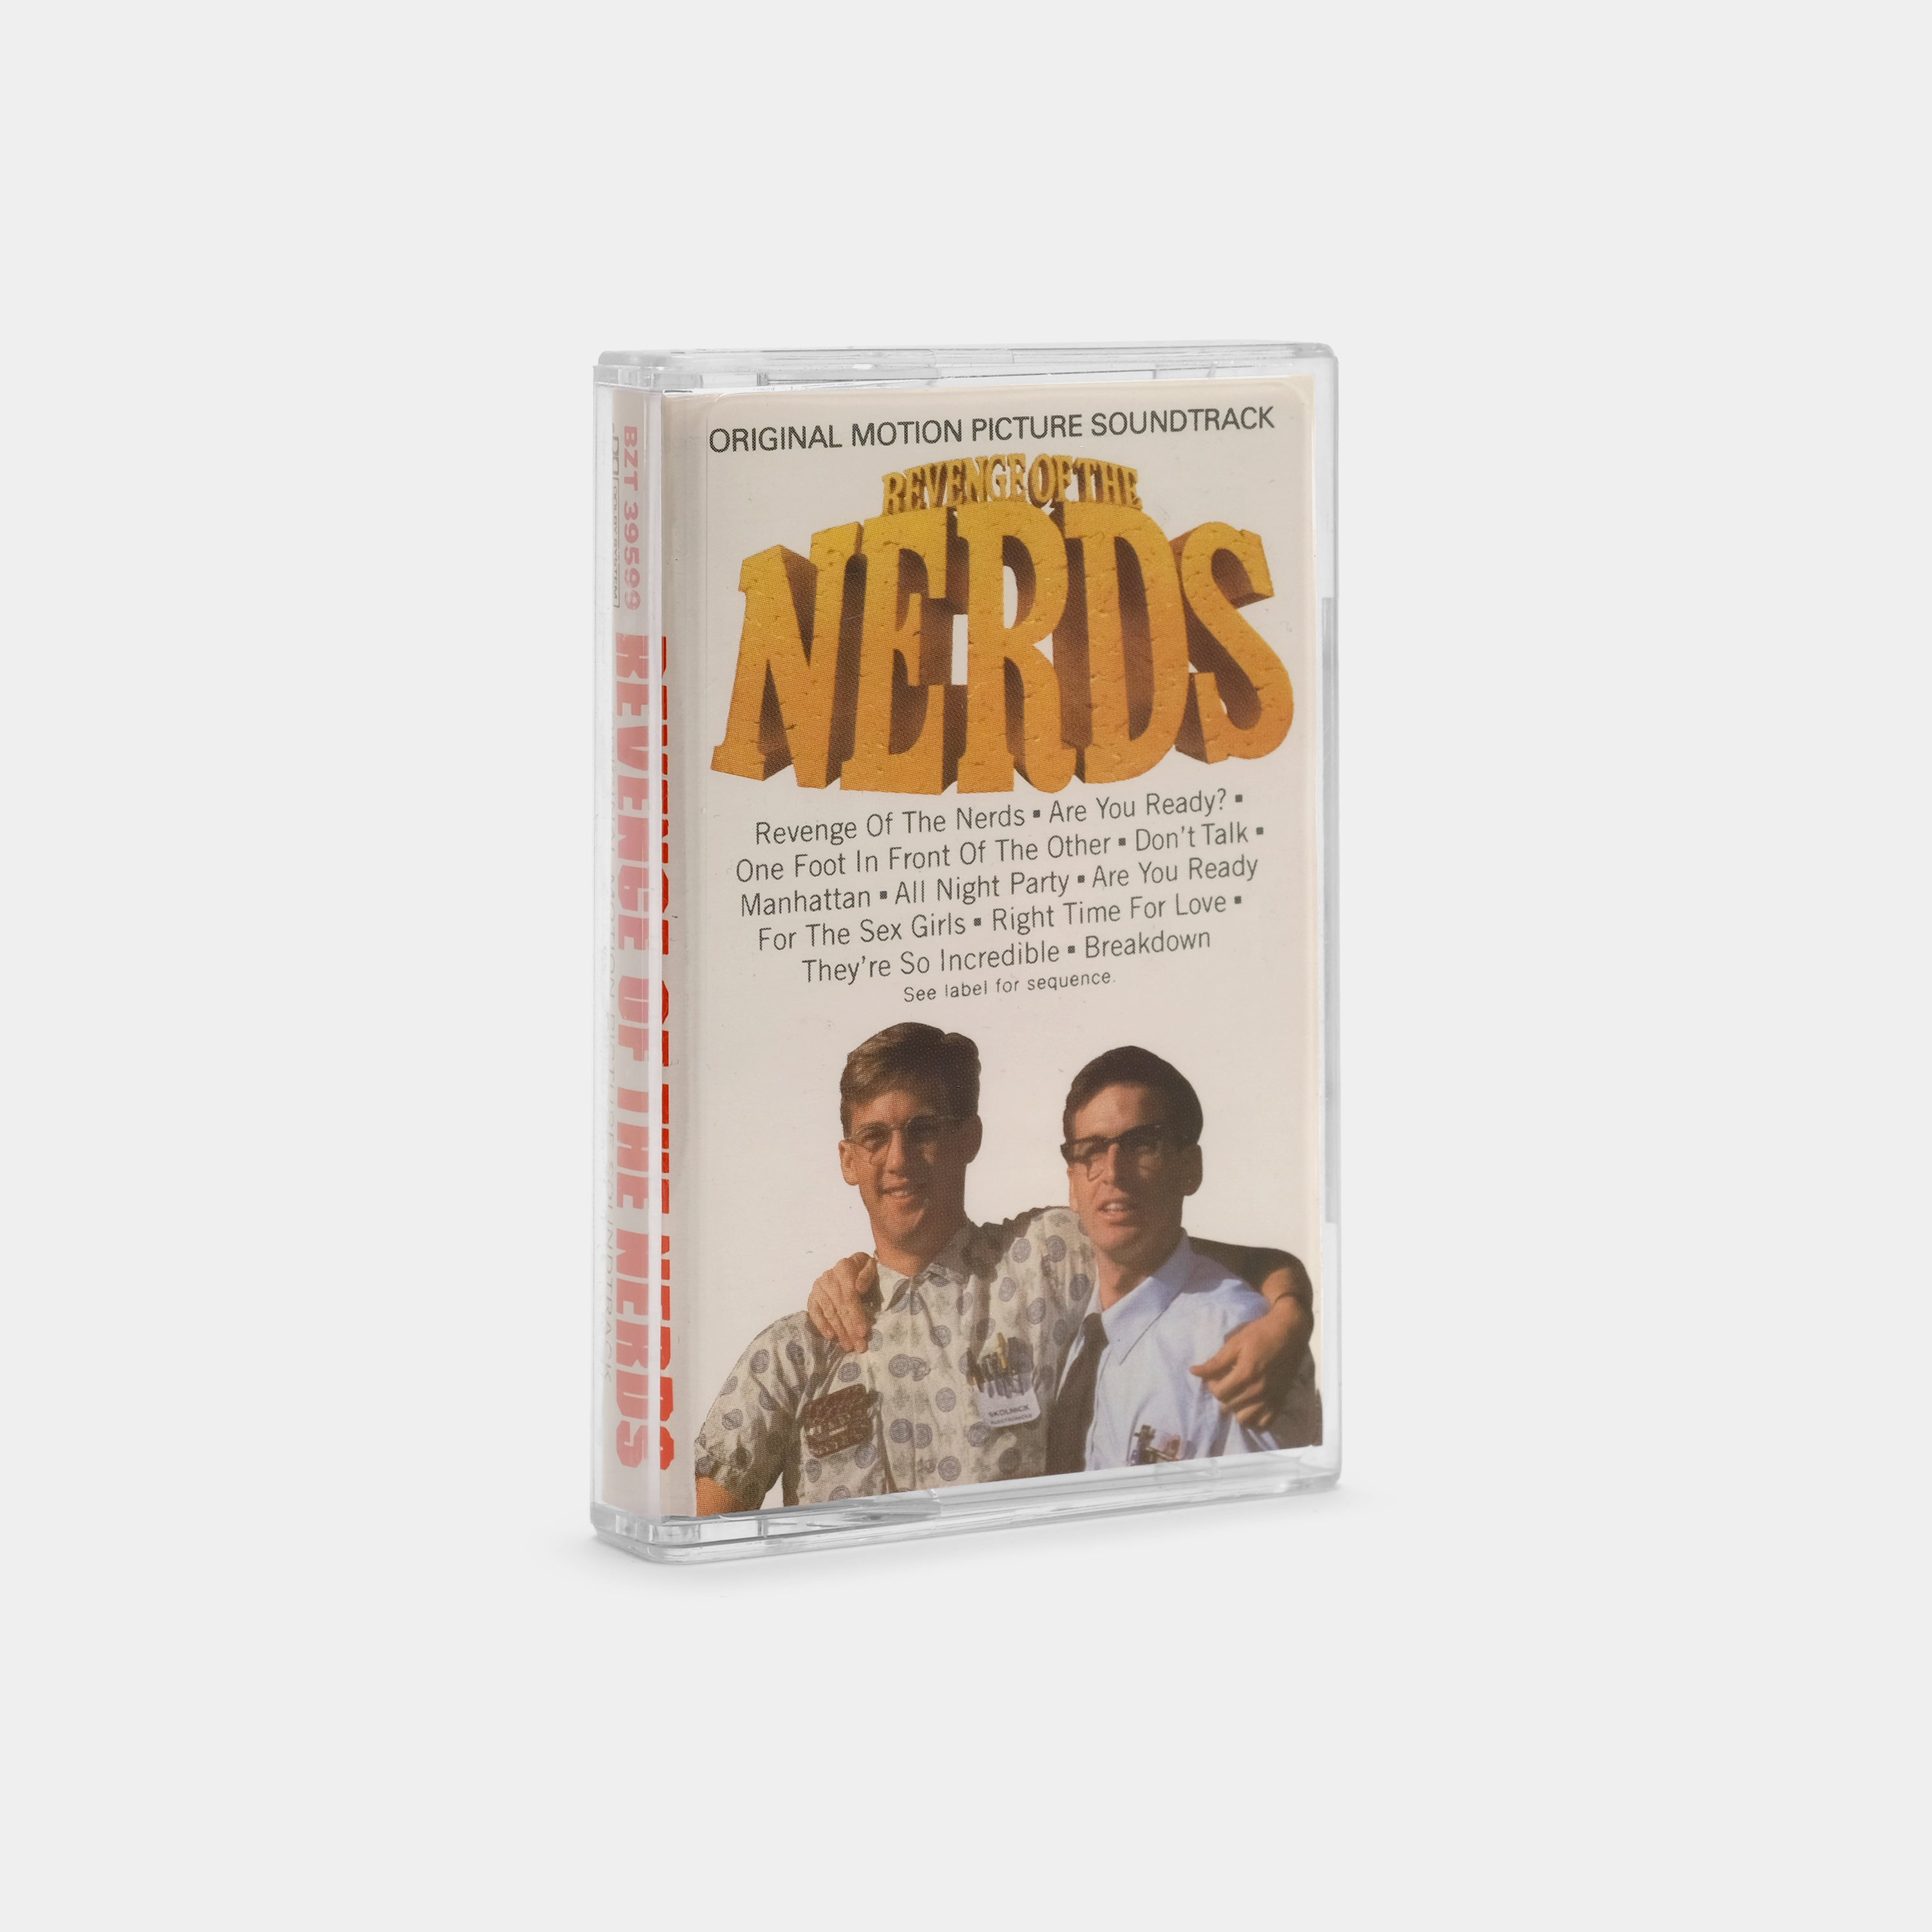 Revenge of the Nerds (Original Motion Picture Soundtrack) Cassette Tape